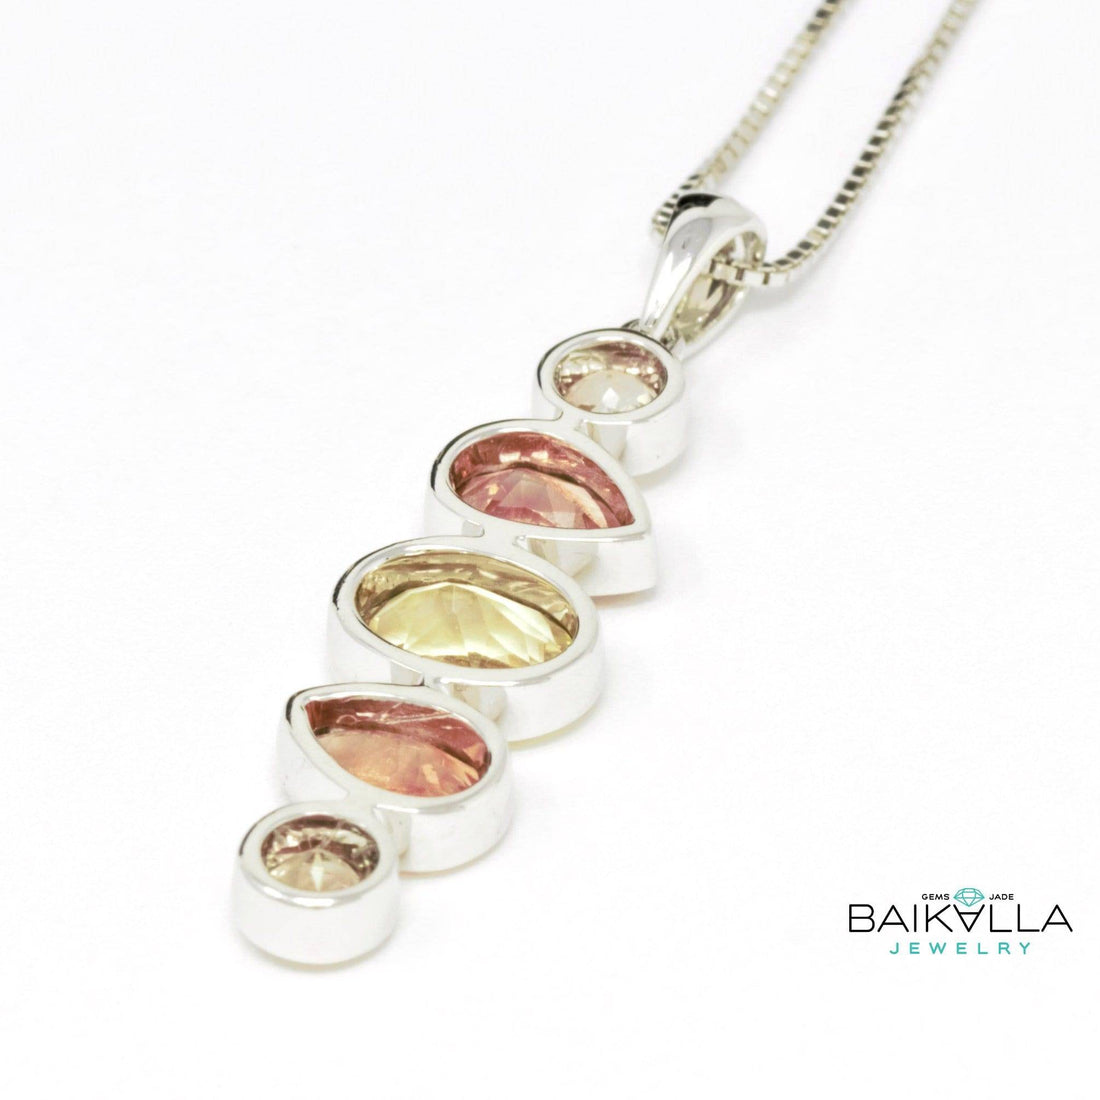 Baikalla Jewelry Gold Gemstone Necklace Pendant with Gold Chain Baikalla™ "Savannah" 14k Gold Natural  5 Oregon Sunstones Pendant Necklace